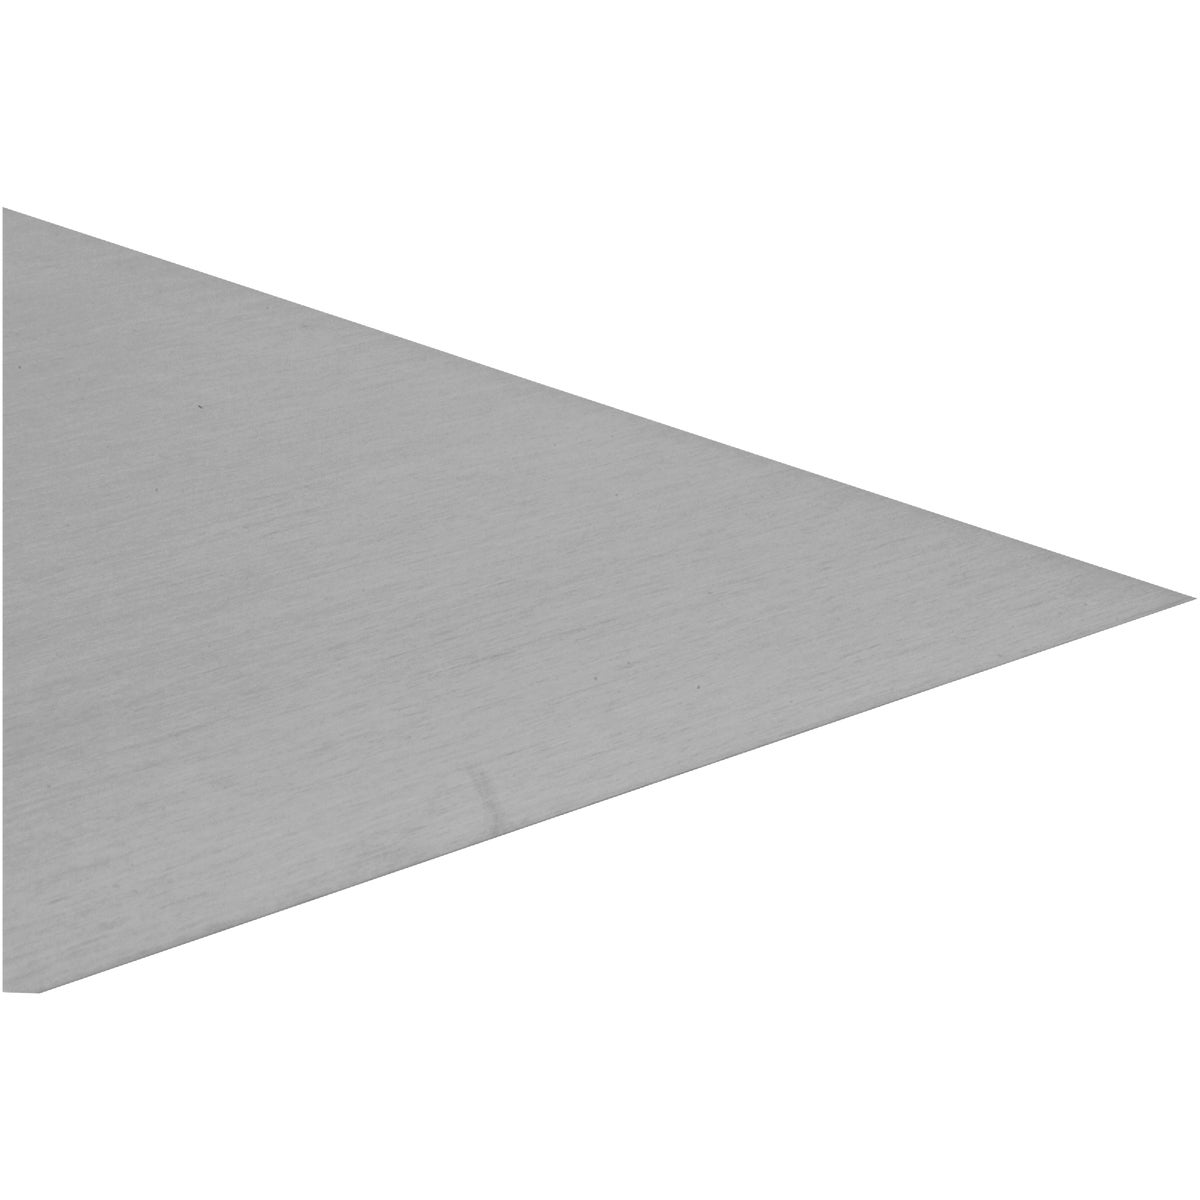 Item 768283, Solid plain metal sheets have applications for gutter repair, auto repair, 